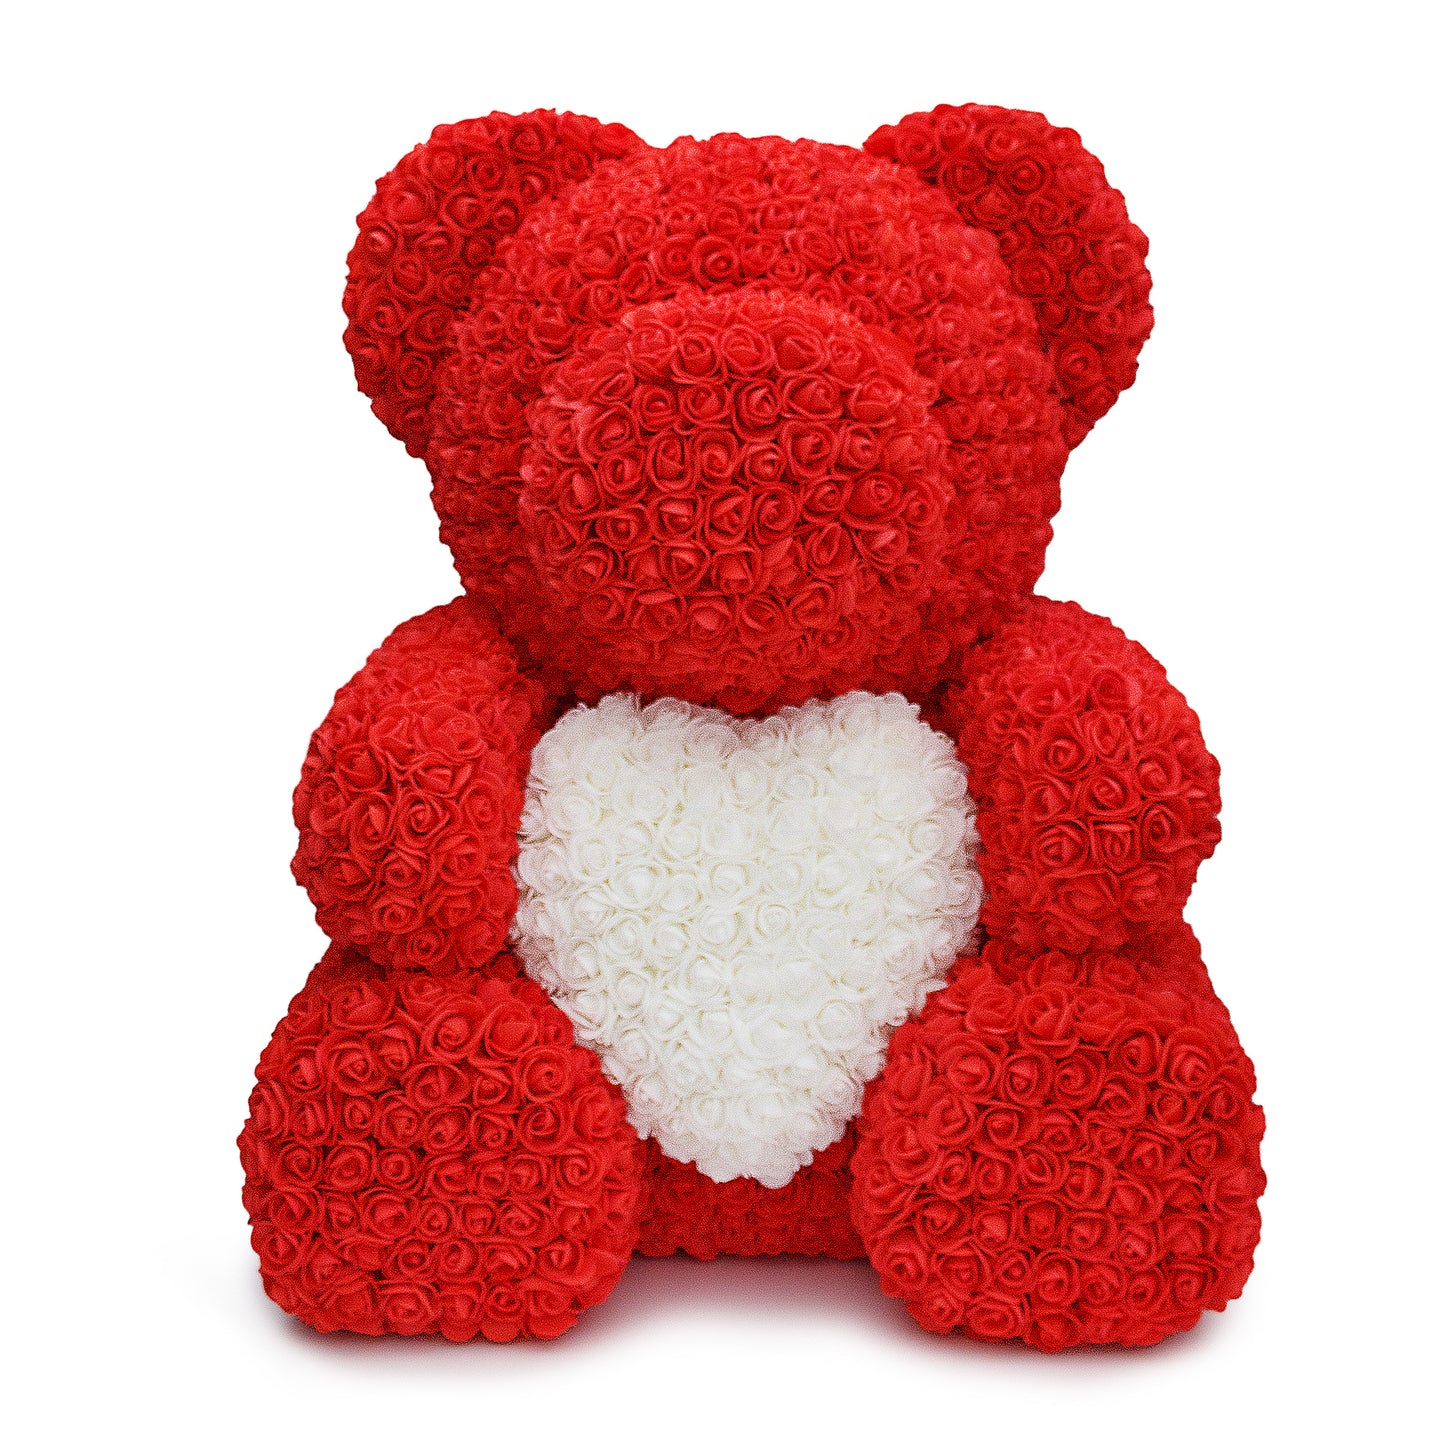 BIG Red Rose Teddy Bear & White Heart -1